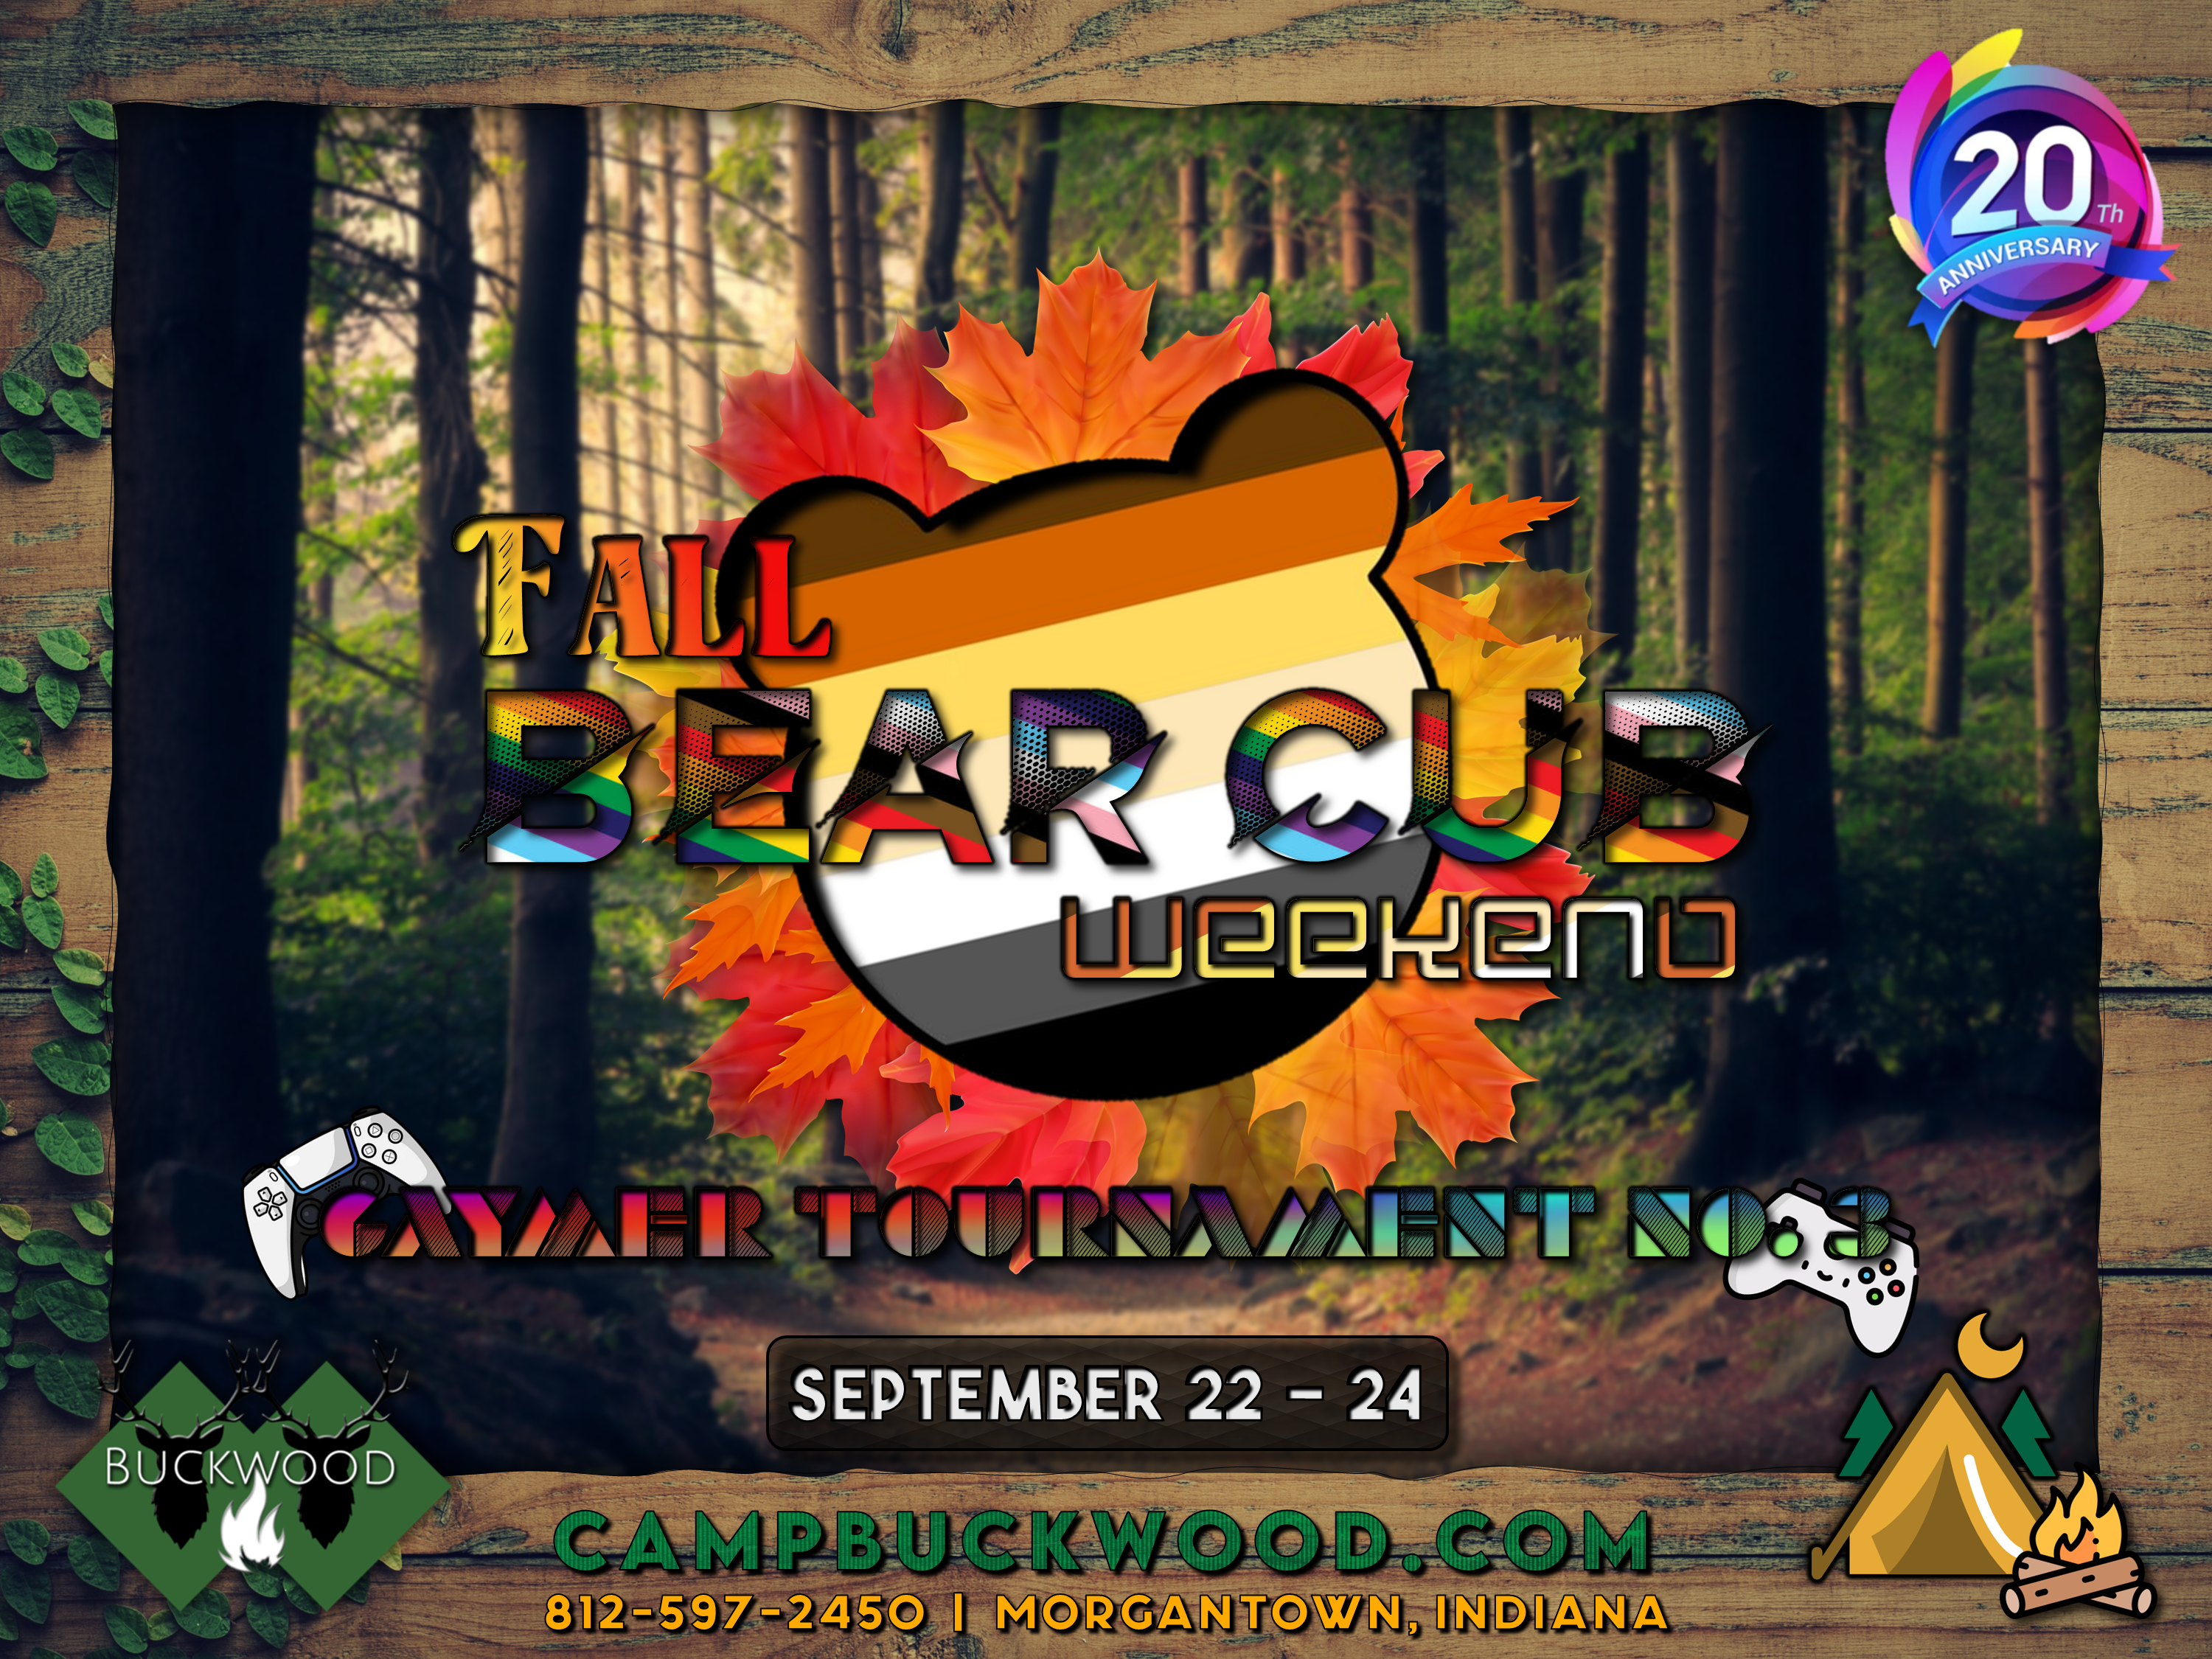 Camp Buckwood 2023 Fall Bear & Cub Weekend Event